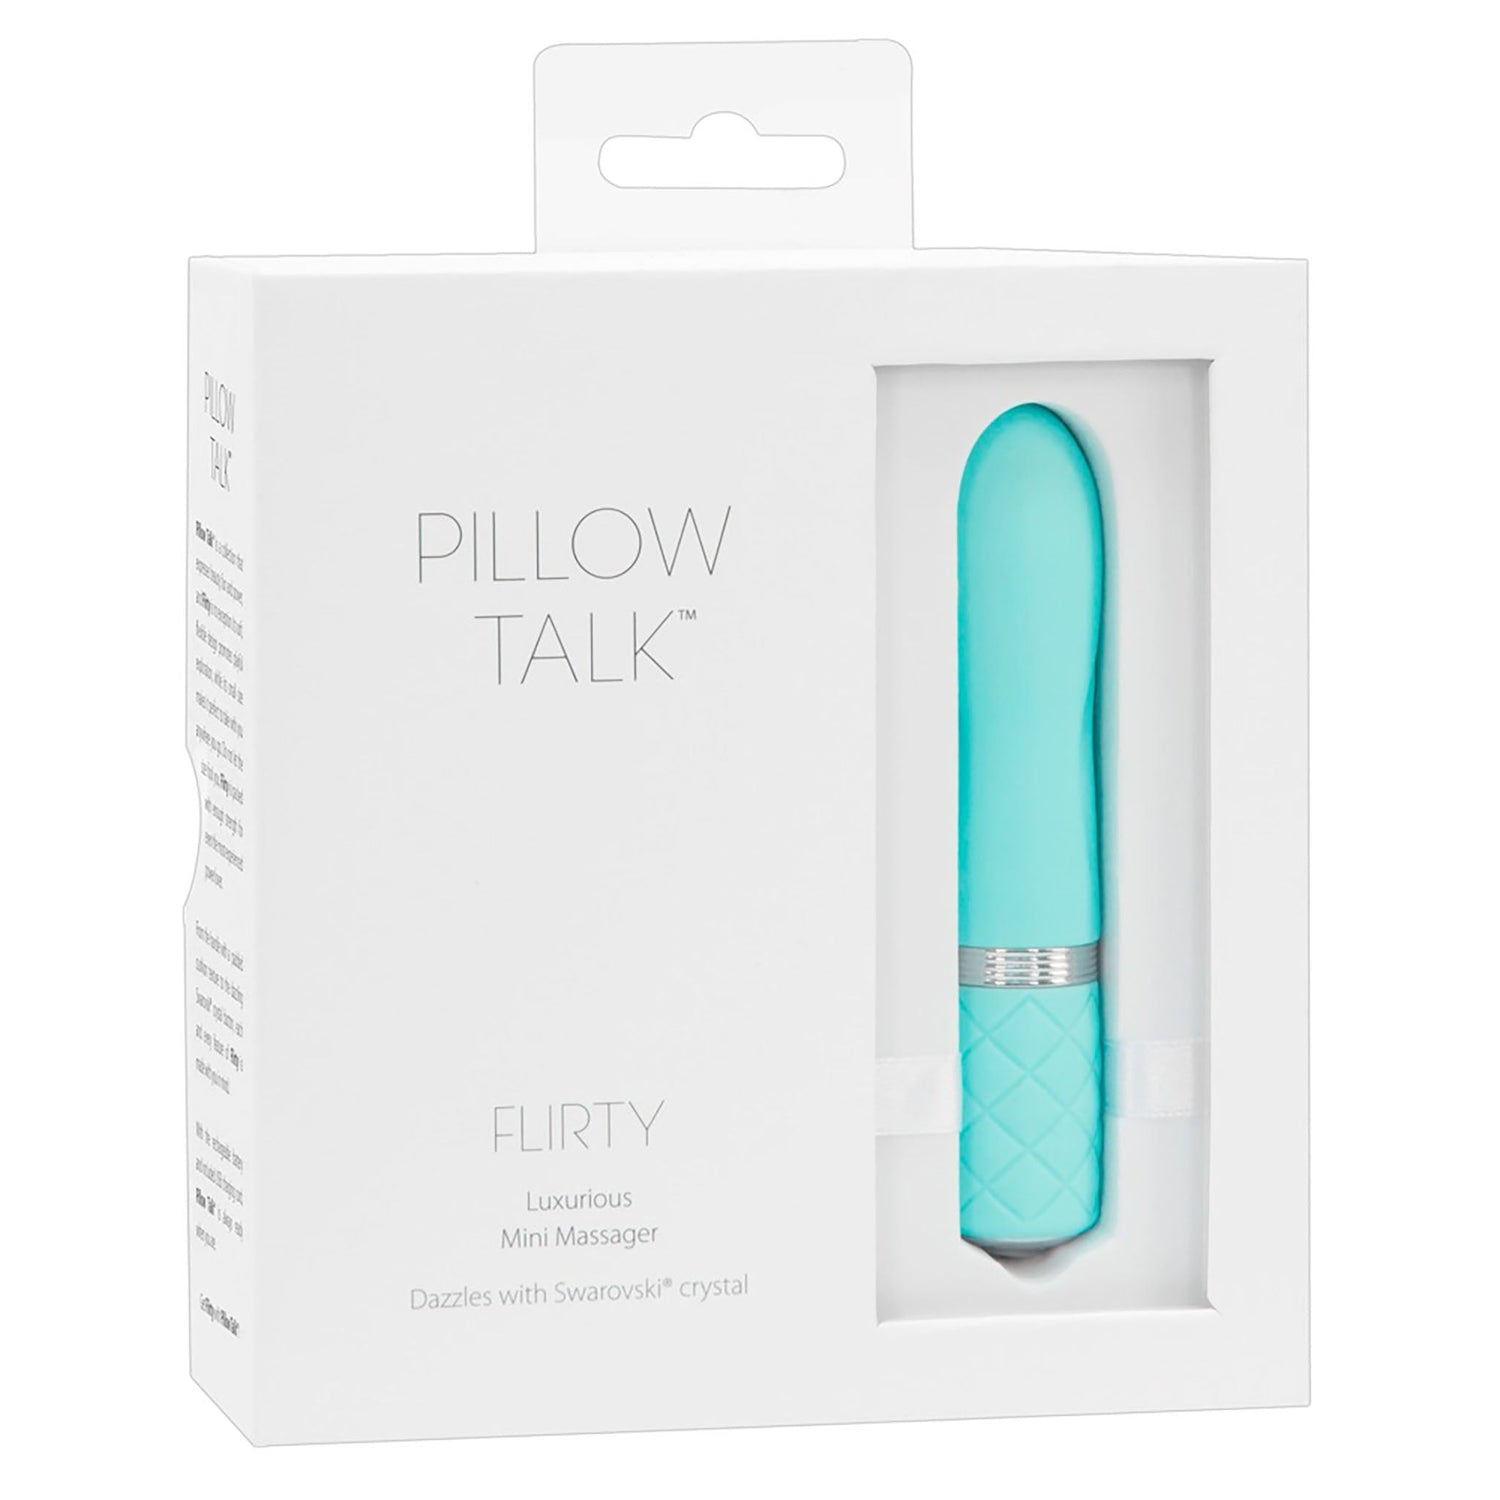 Pillow Talk Flirty Türkis Vibrator Verpackung geöffnet